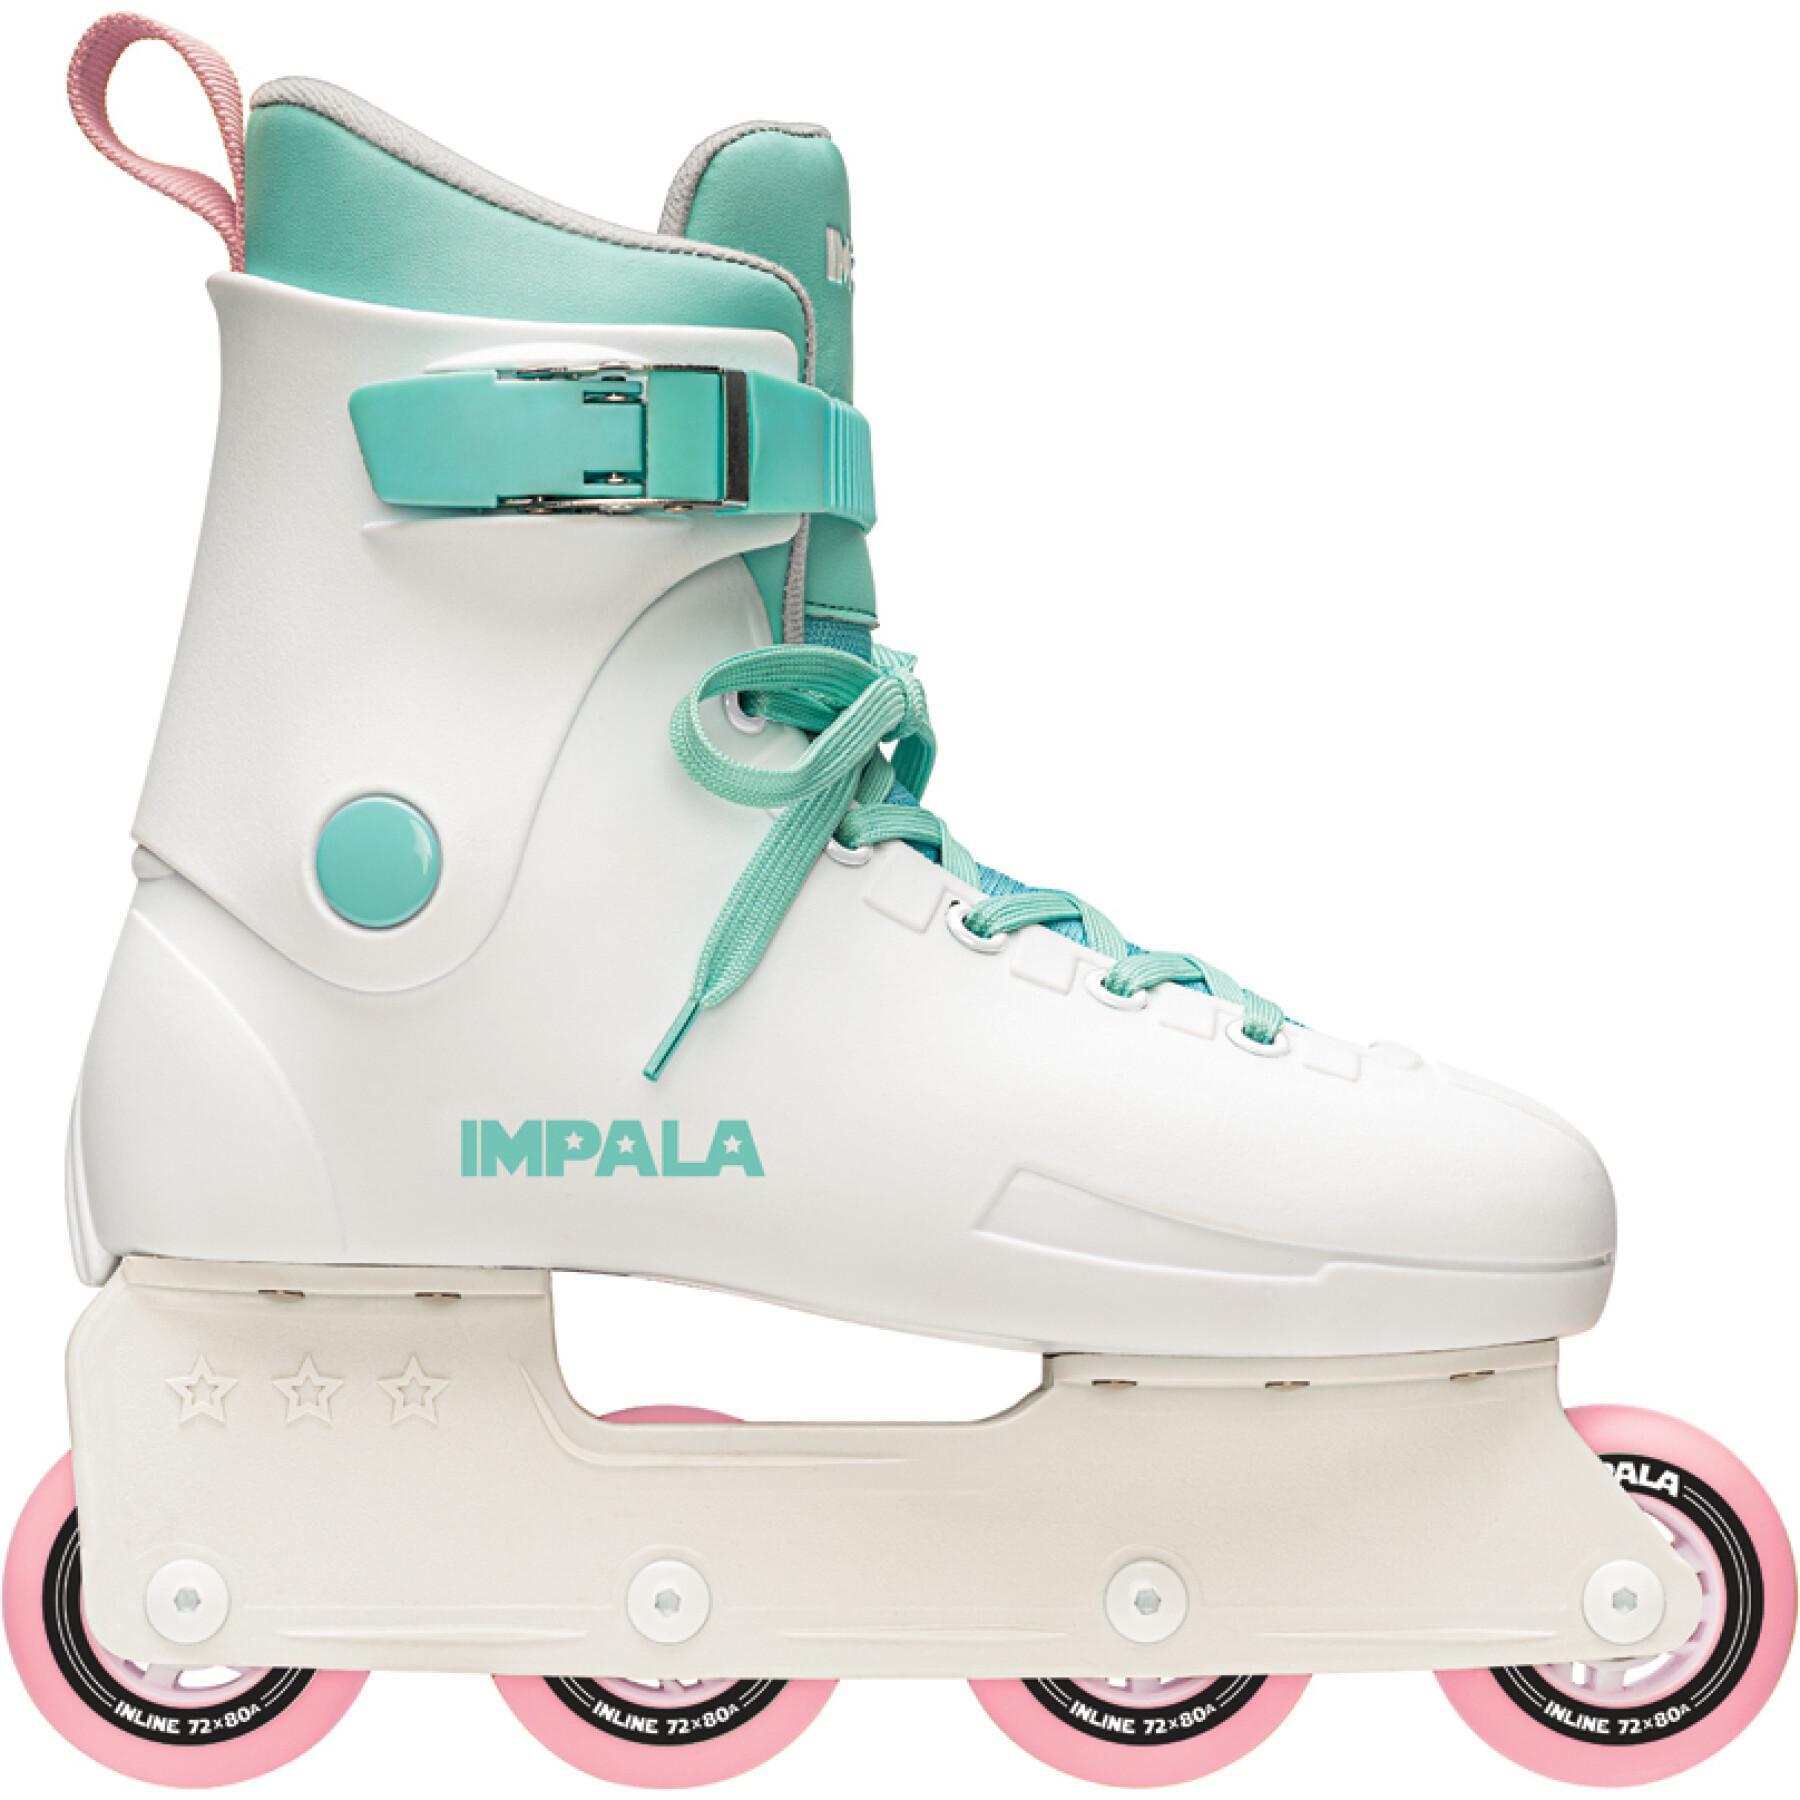 Schoenen Impala Lightspeed Inline Skate